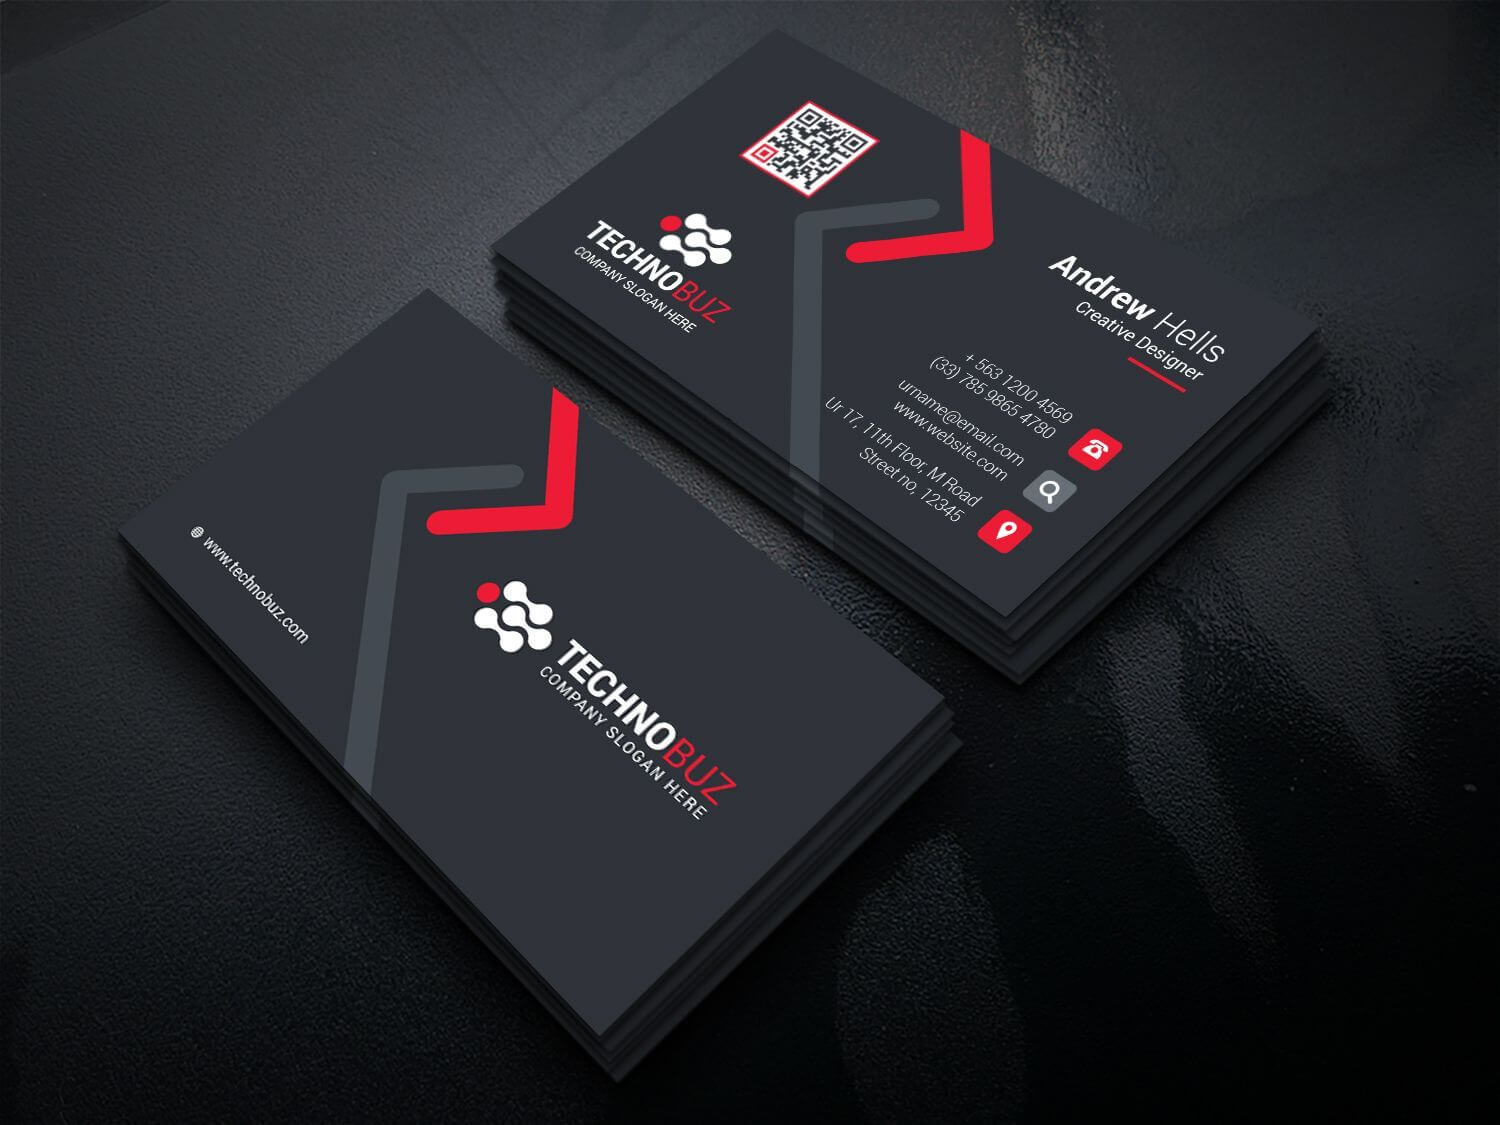 High Tech Company Business Card Template | Business Cards Inside Company Business Cards Templates